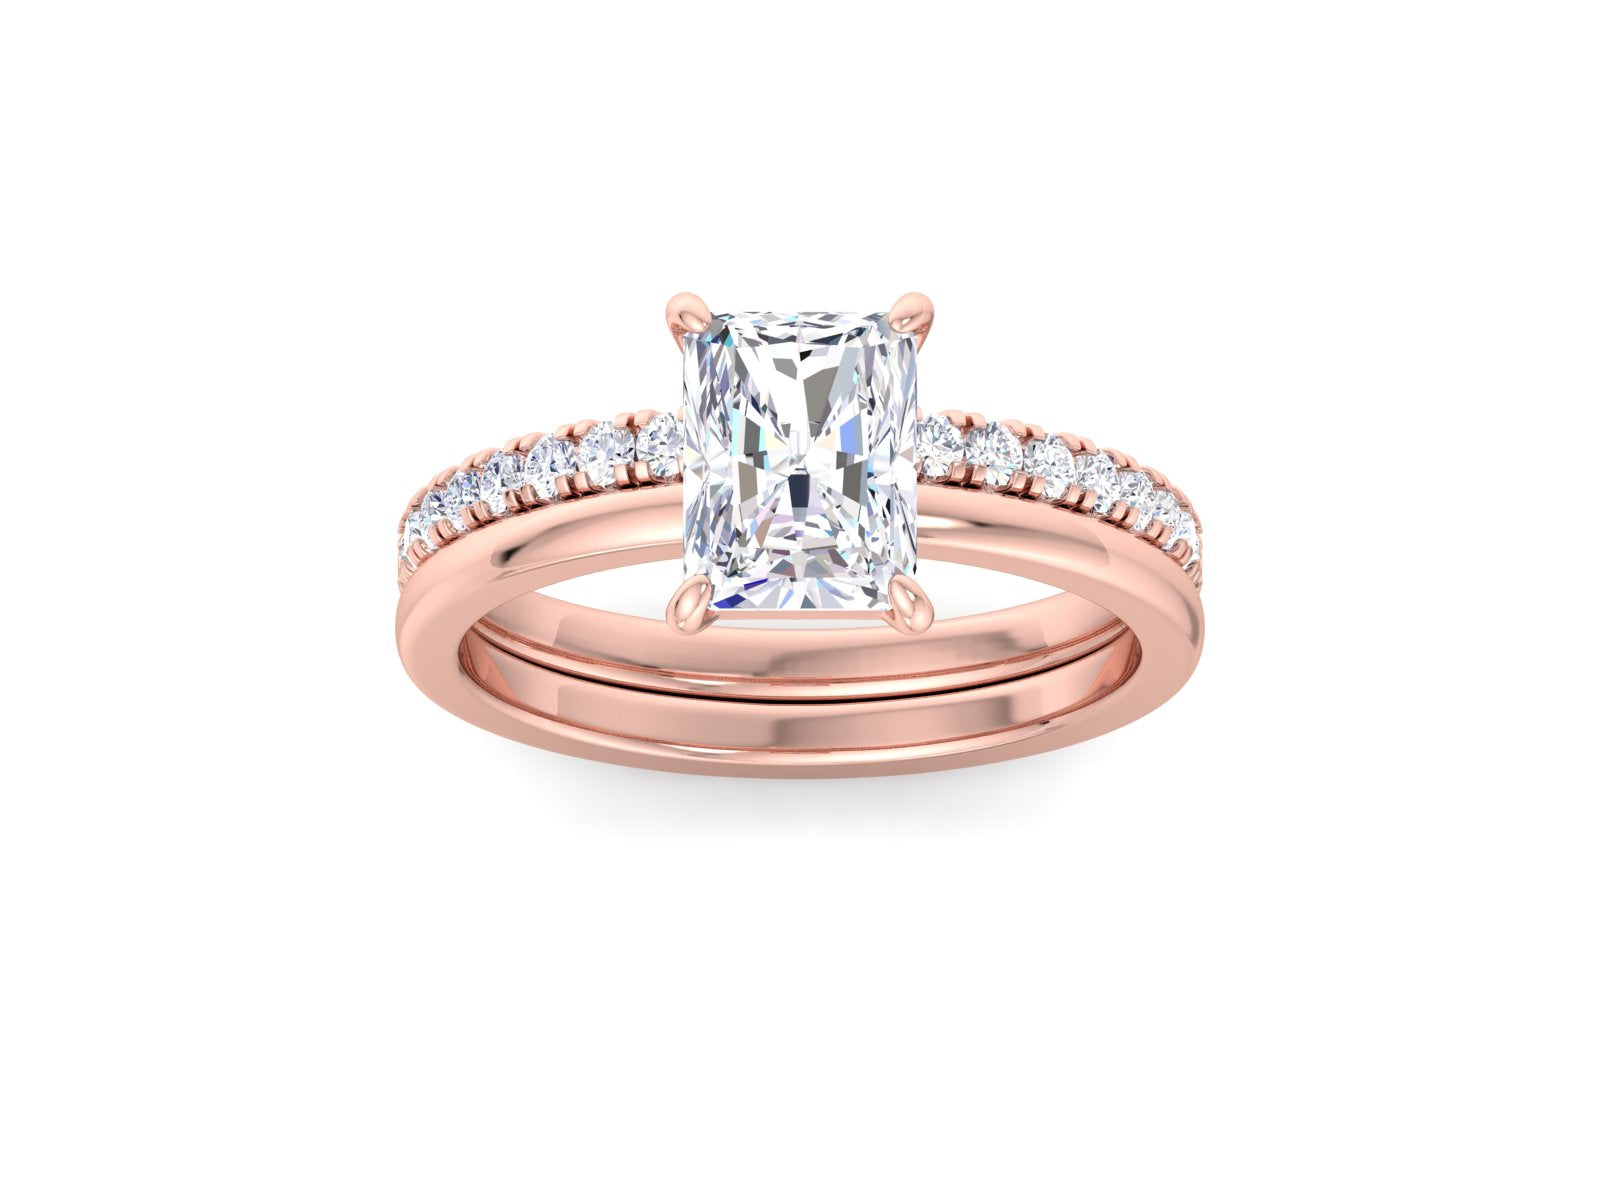 IGI Certified 2.0Ct 14K Rose Gold Radiant Cut Diamond Ring sets